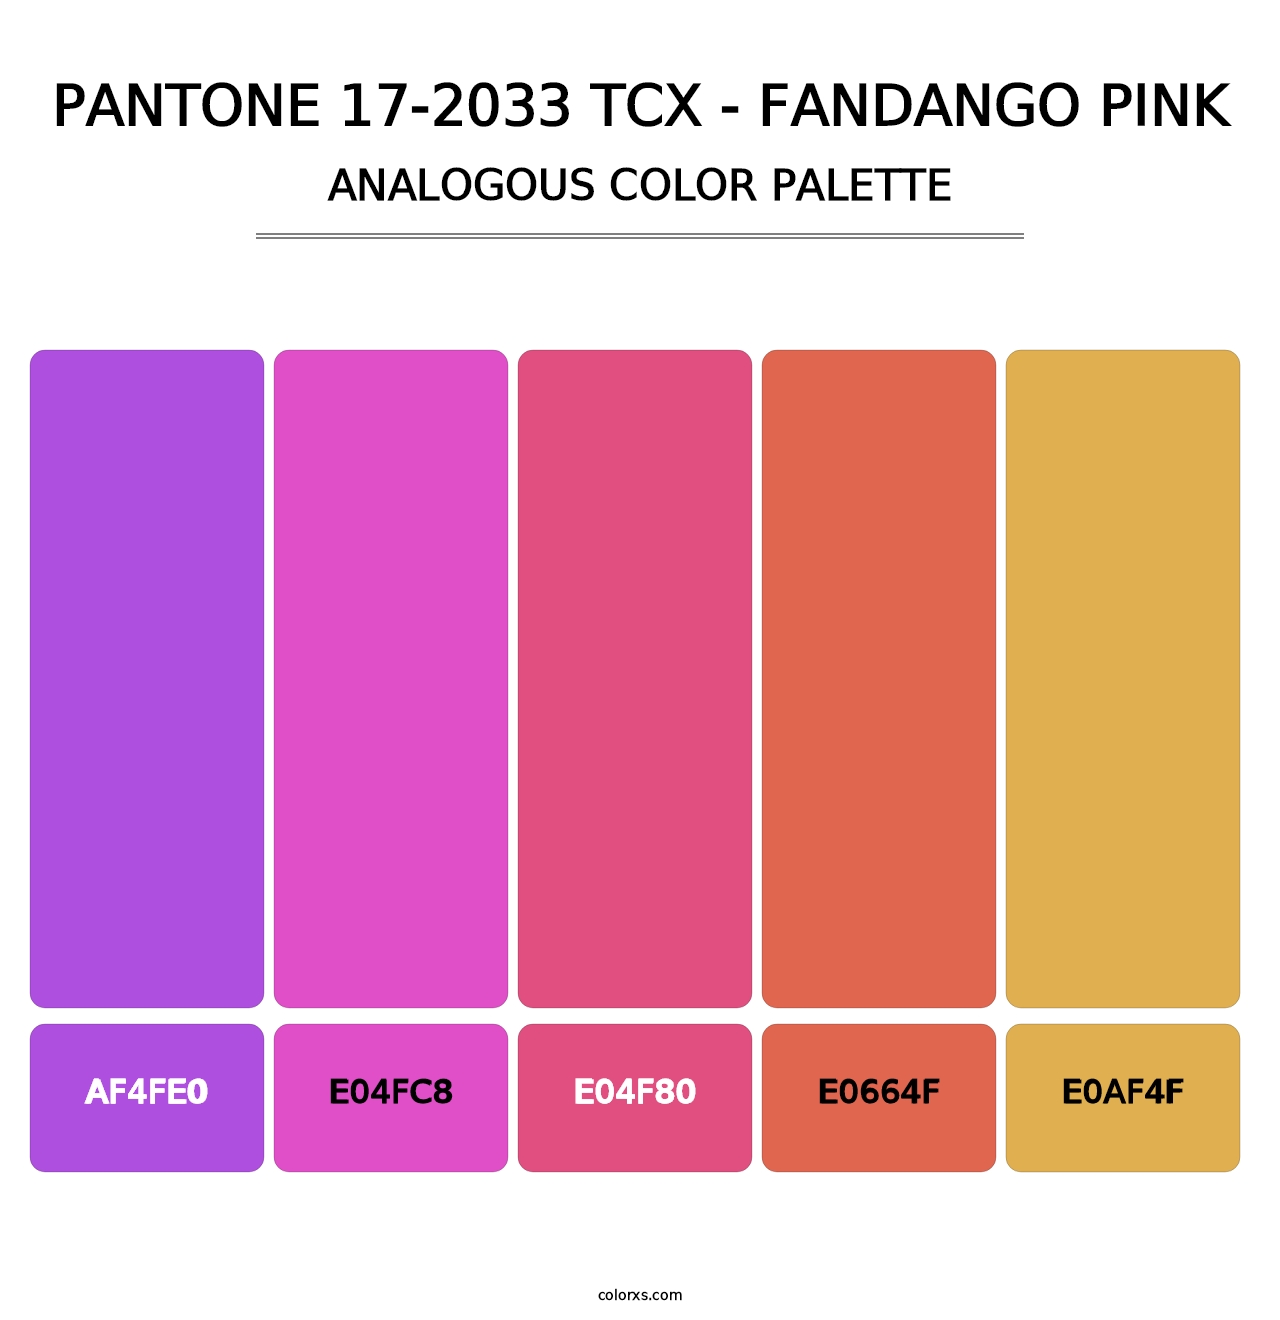 PANTONE 17-2033 TCX - Fandango Pink - Analogous Color Palette